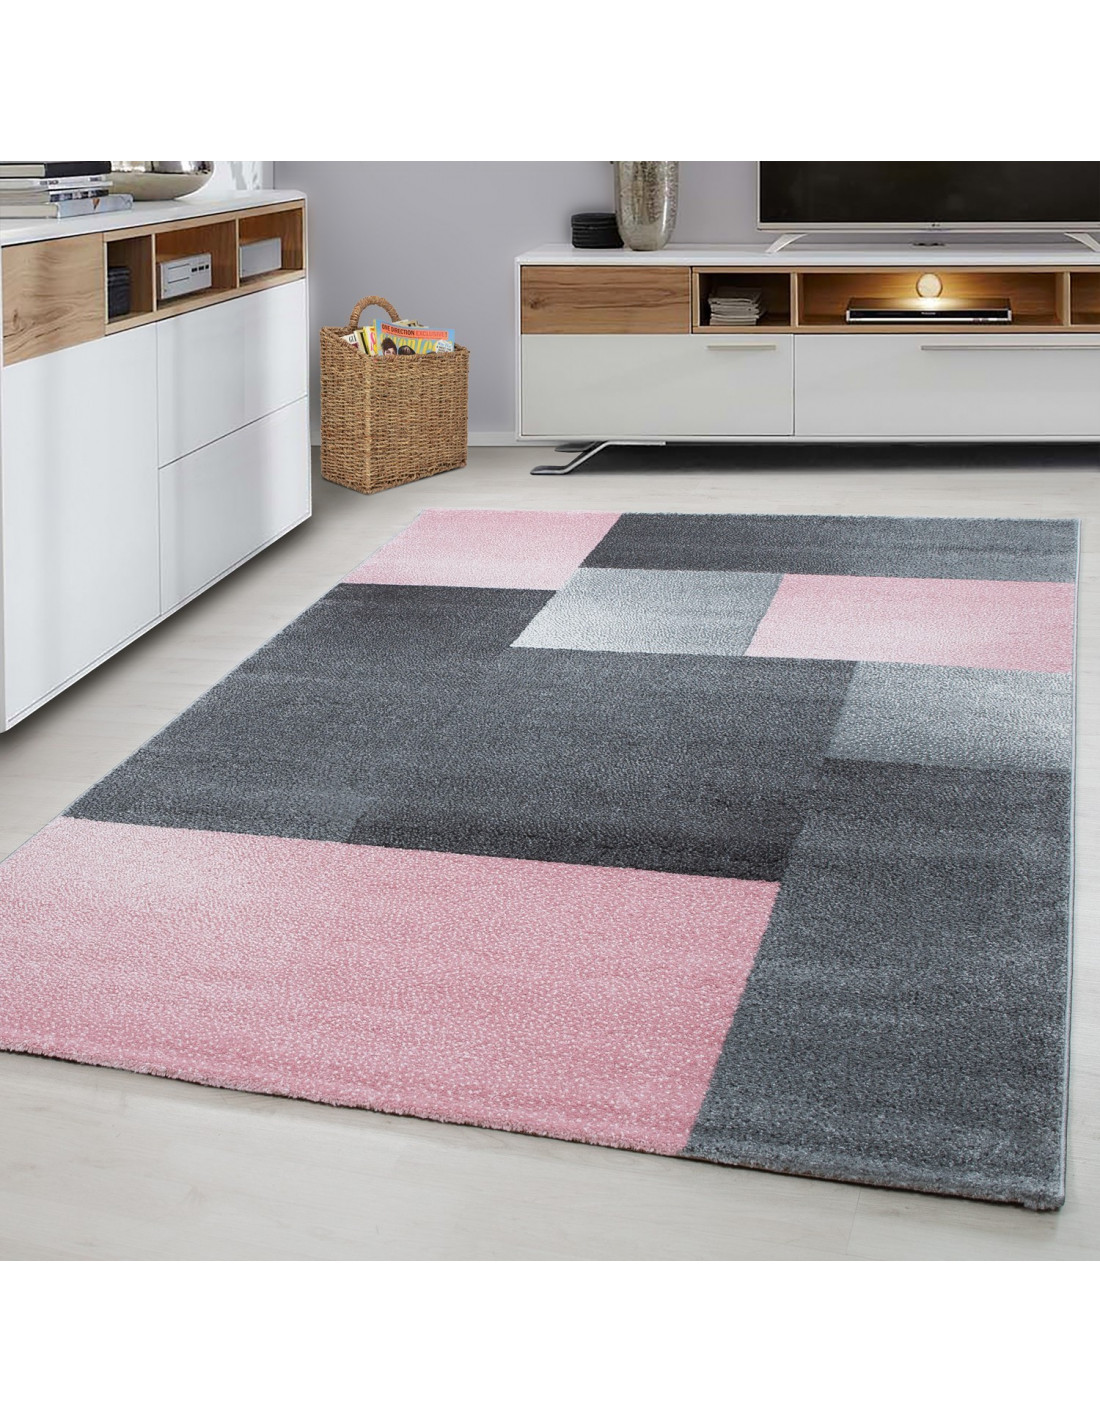 RUGMRZ Alfombra Pelo Corto Salon Moda Simple alfombras de Pelo Corto  alfombras Lavables Salon alfombras pequeñas160X200cm